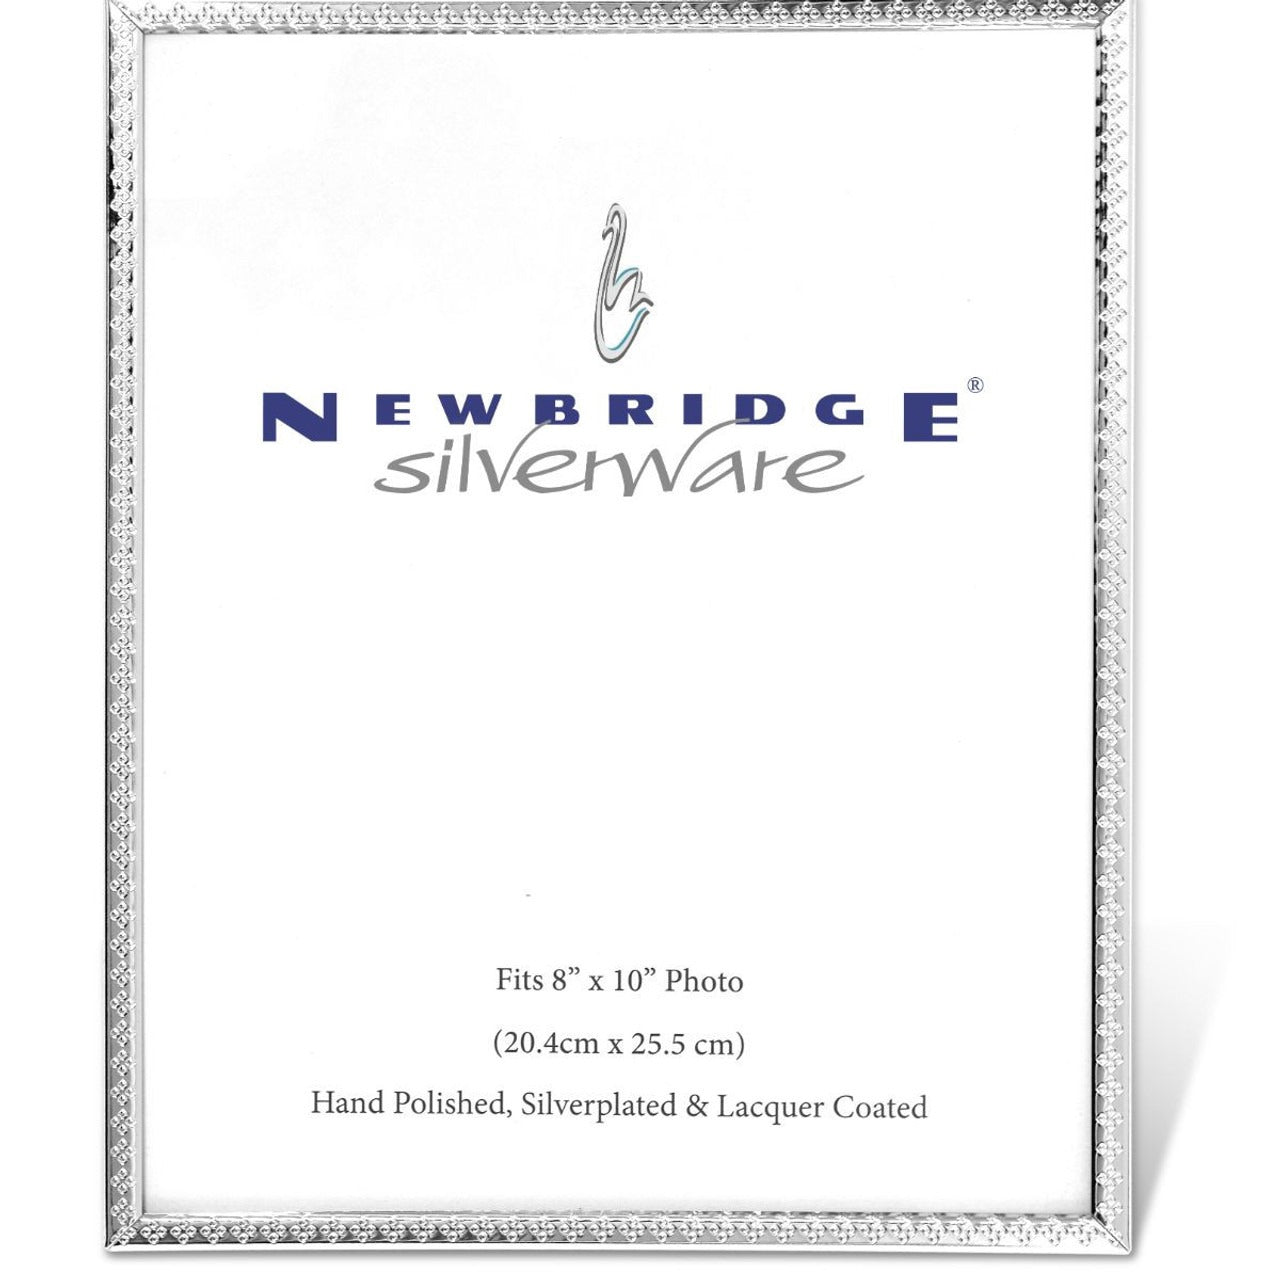 NEWBRIDGE SILVERWARE FRAME 8" X 10" WITH DECORATIVE EDGE